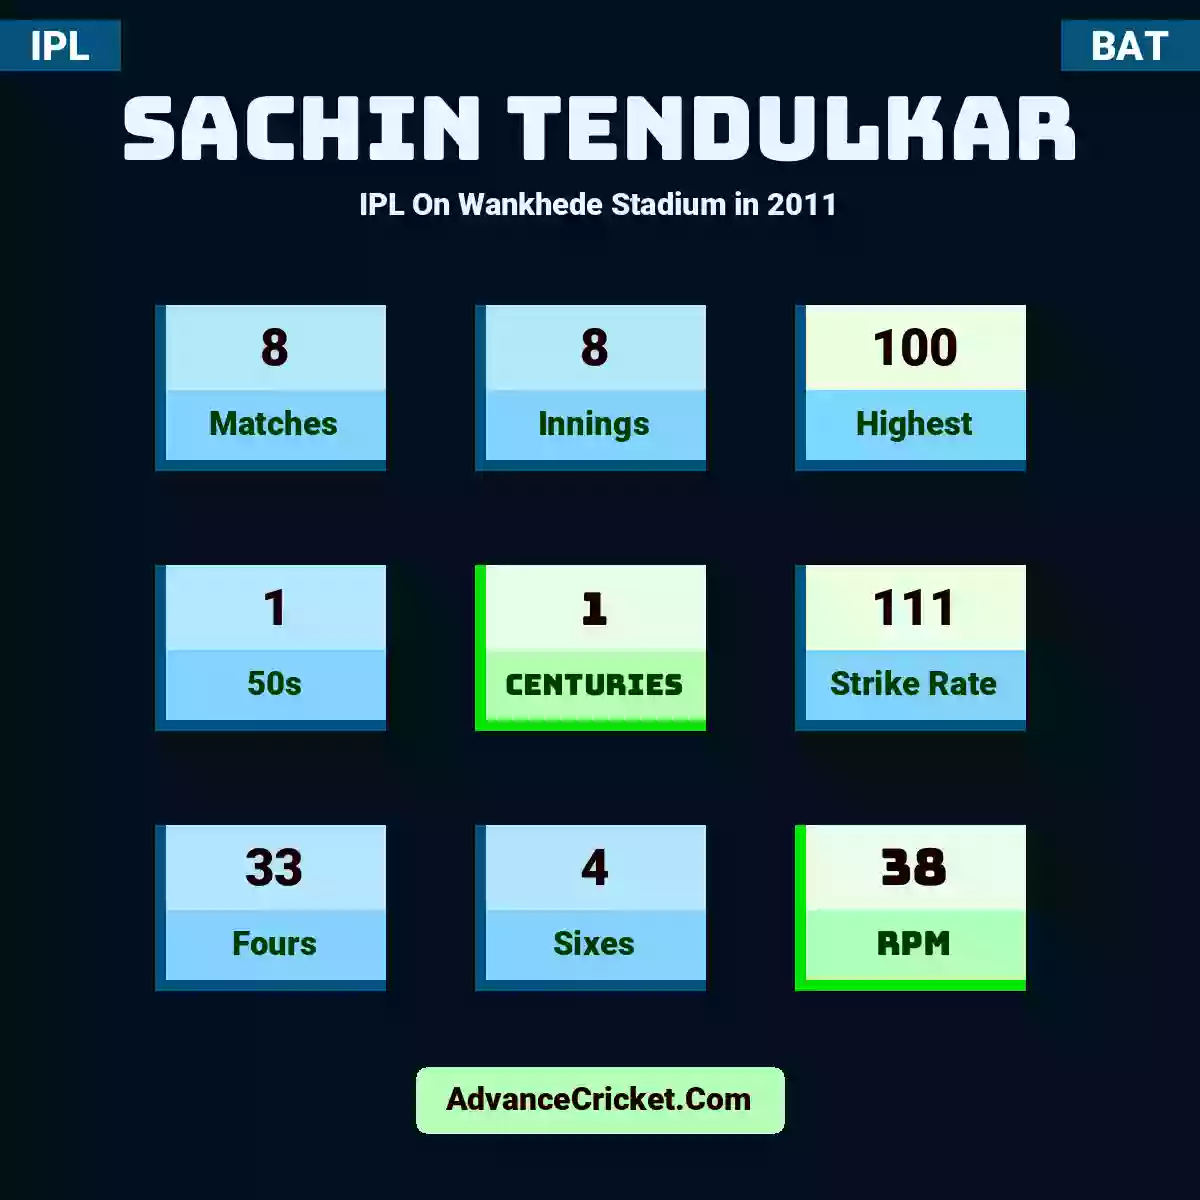 Sachin Tendulkar IPL  On Wankhede Stadium in 2011, Sachin Tendulkar played 8 matches, scored 100 runs as highest, 1 half-centuries, and 1 centuries, with a strike rate of 111. S.Tendulkar hit 33 fours and 4 sixes, with an RPM of 38.